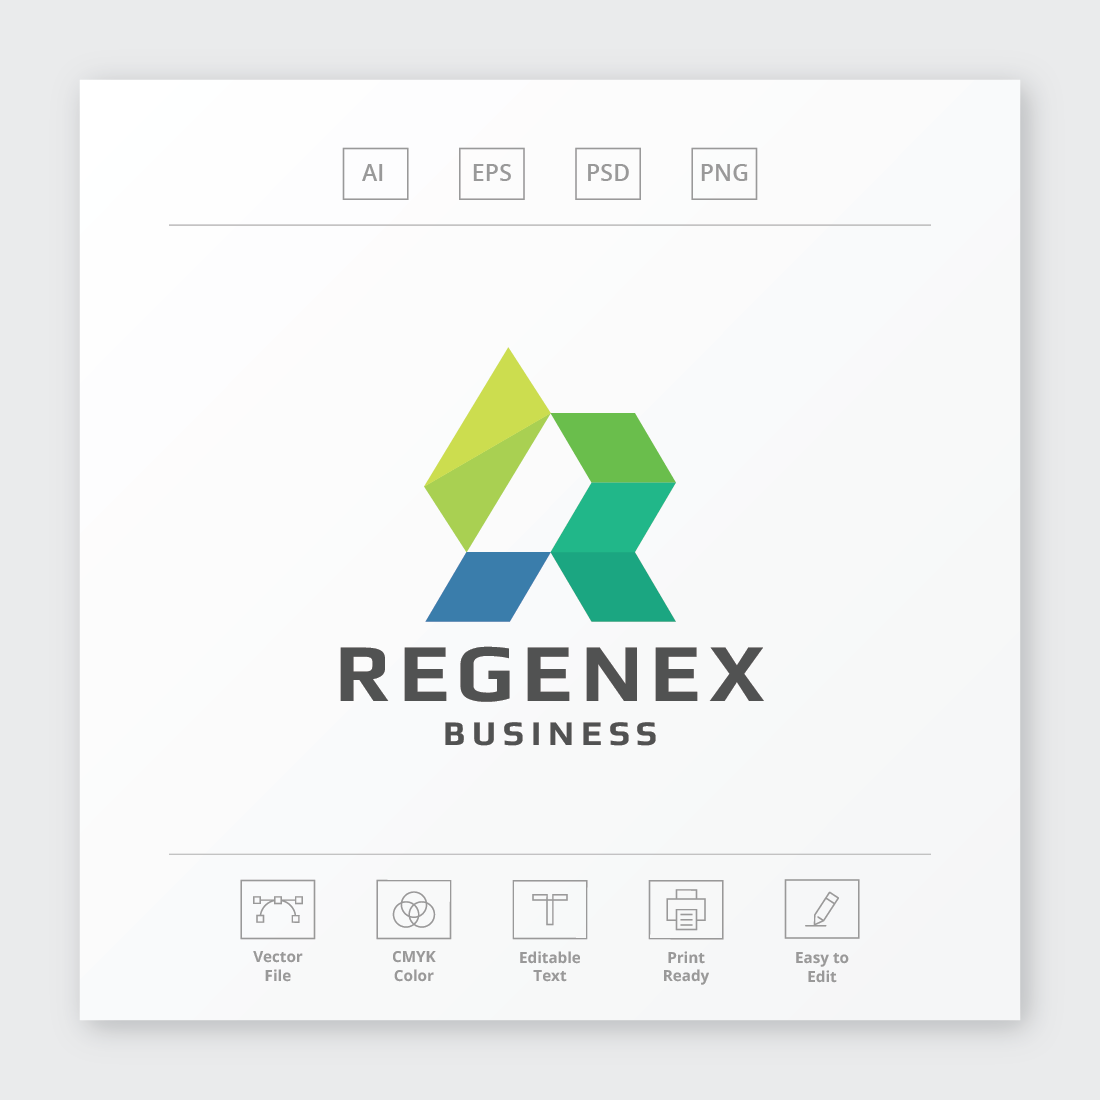 Regenex Letter R Logo cover image.